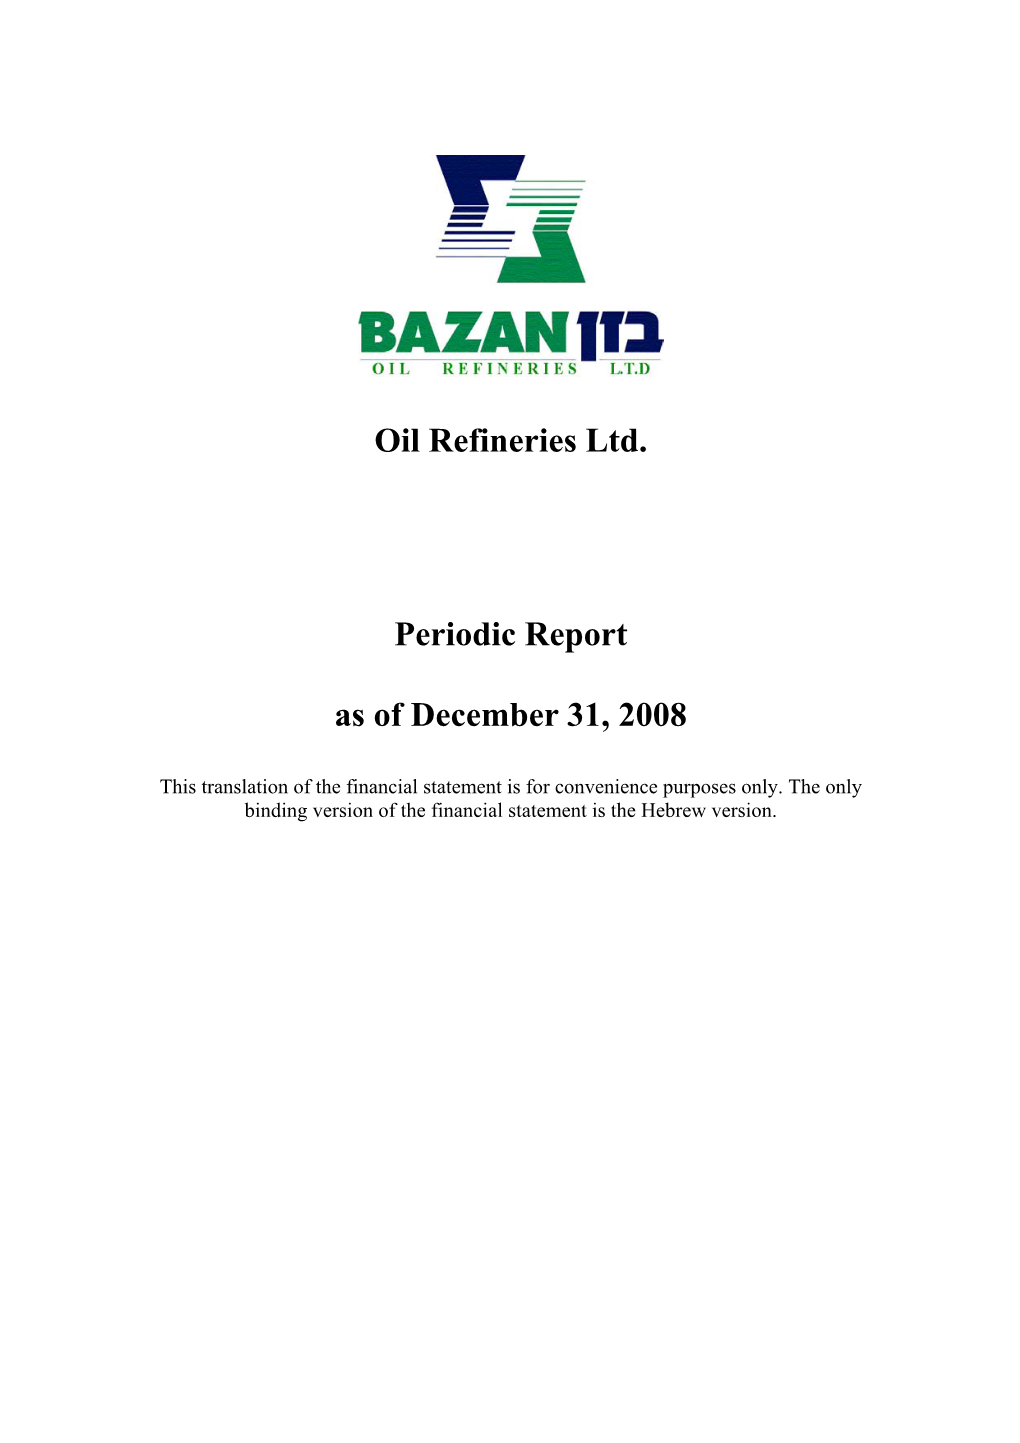 Oil Refineries Ltd. Periodic Report As of December 31, 2008